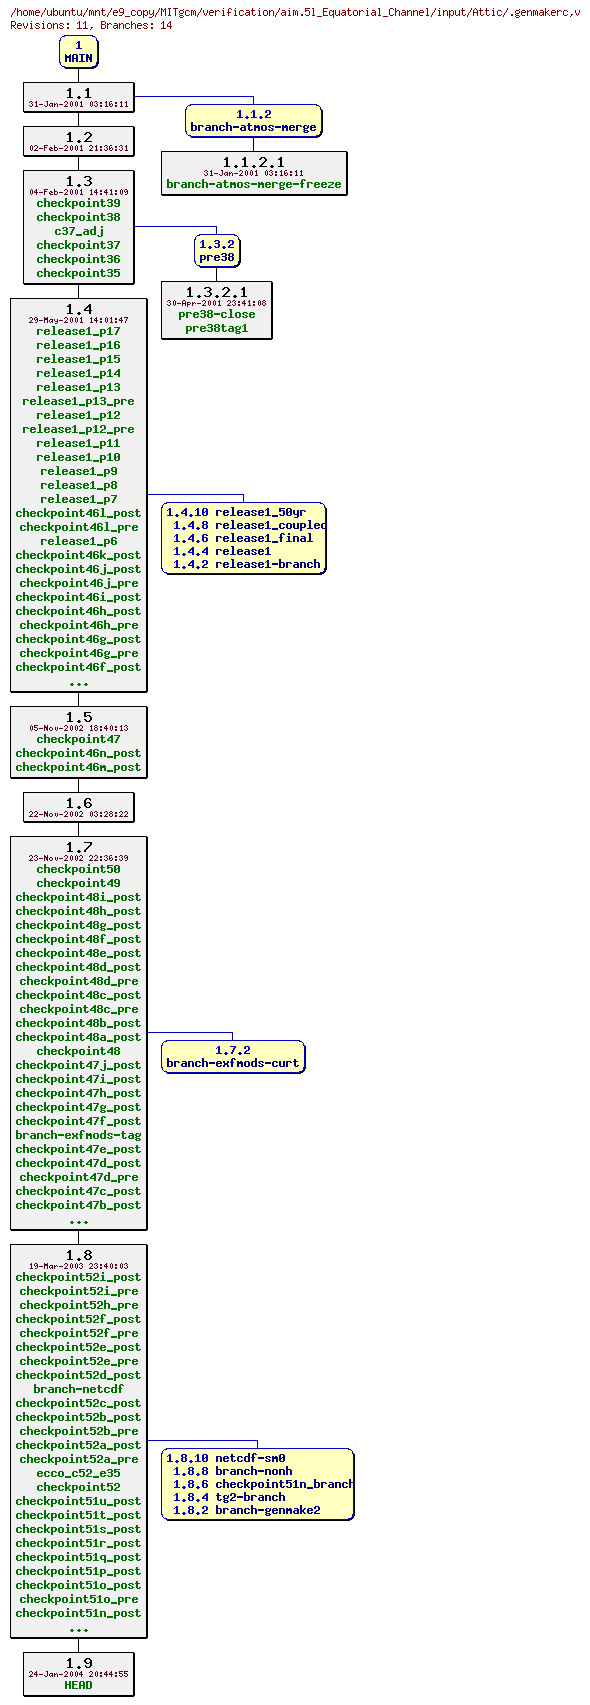 Revisions of MITgcm/verification/aim.5l_Equatorial_Channel/input/.genmakerc